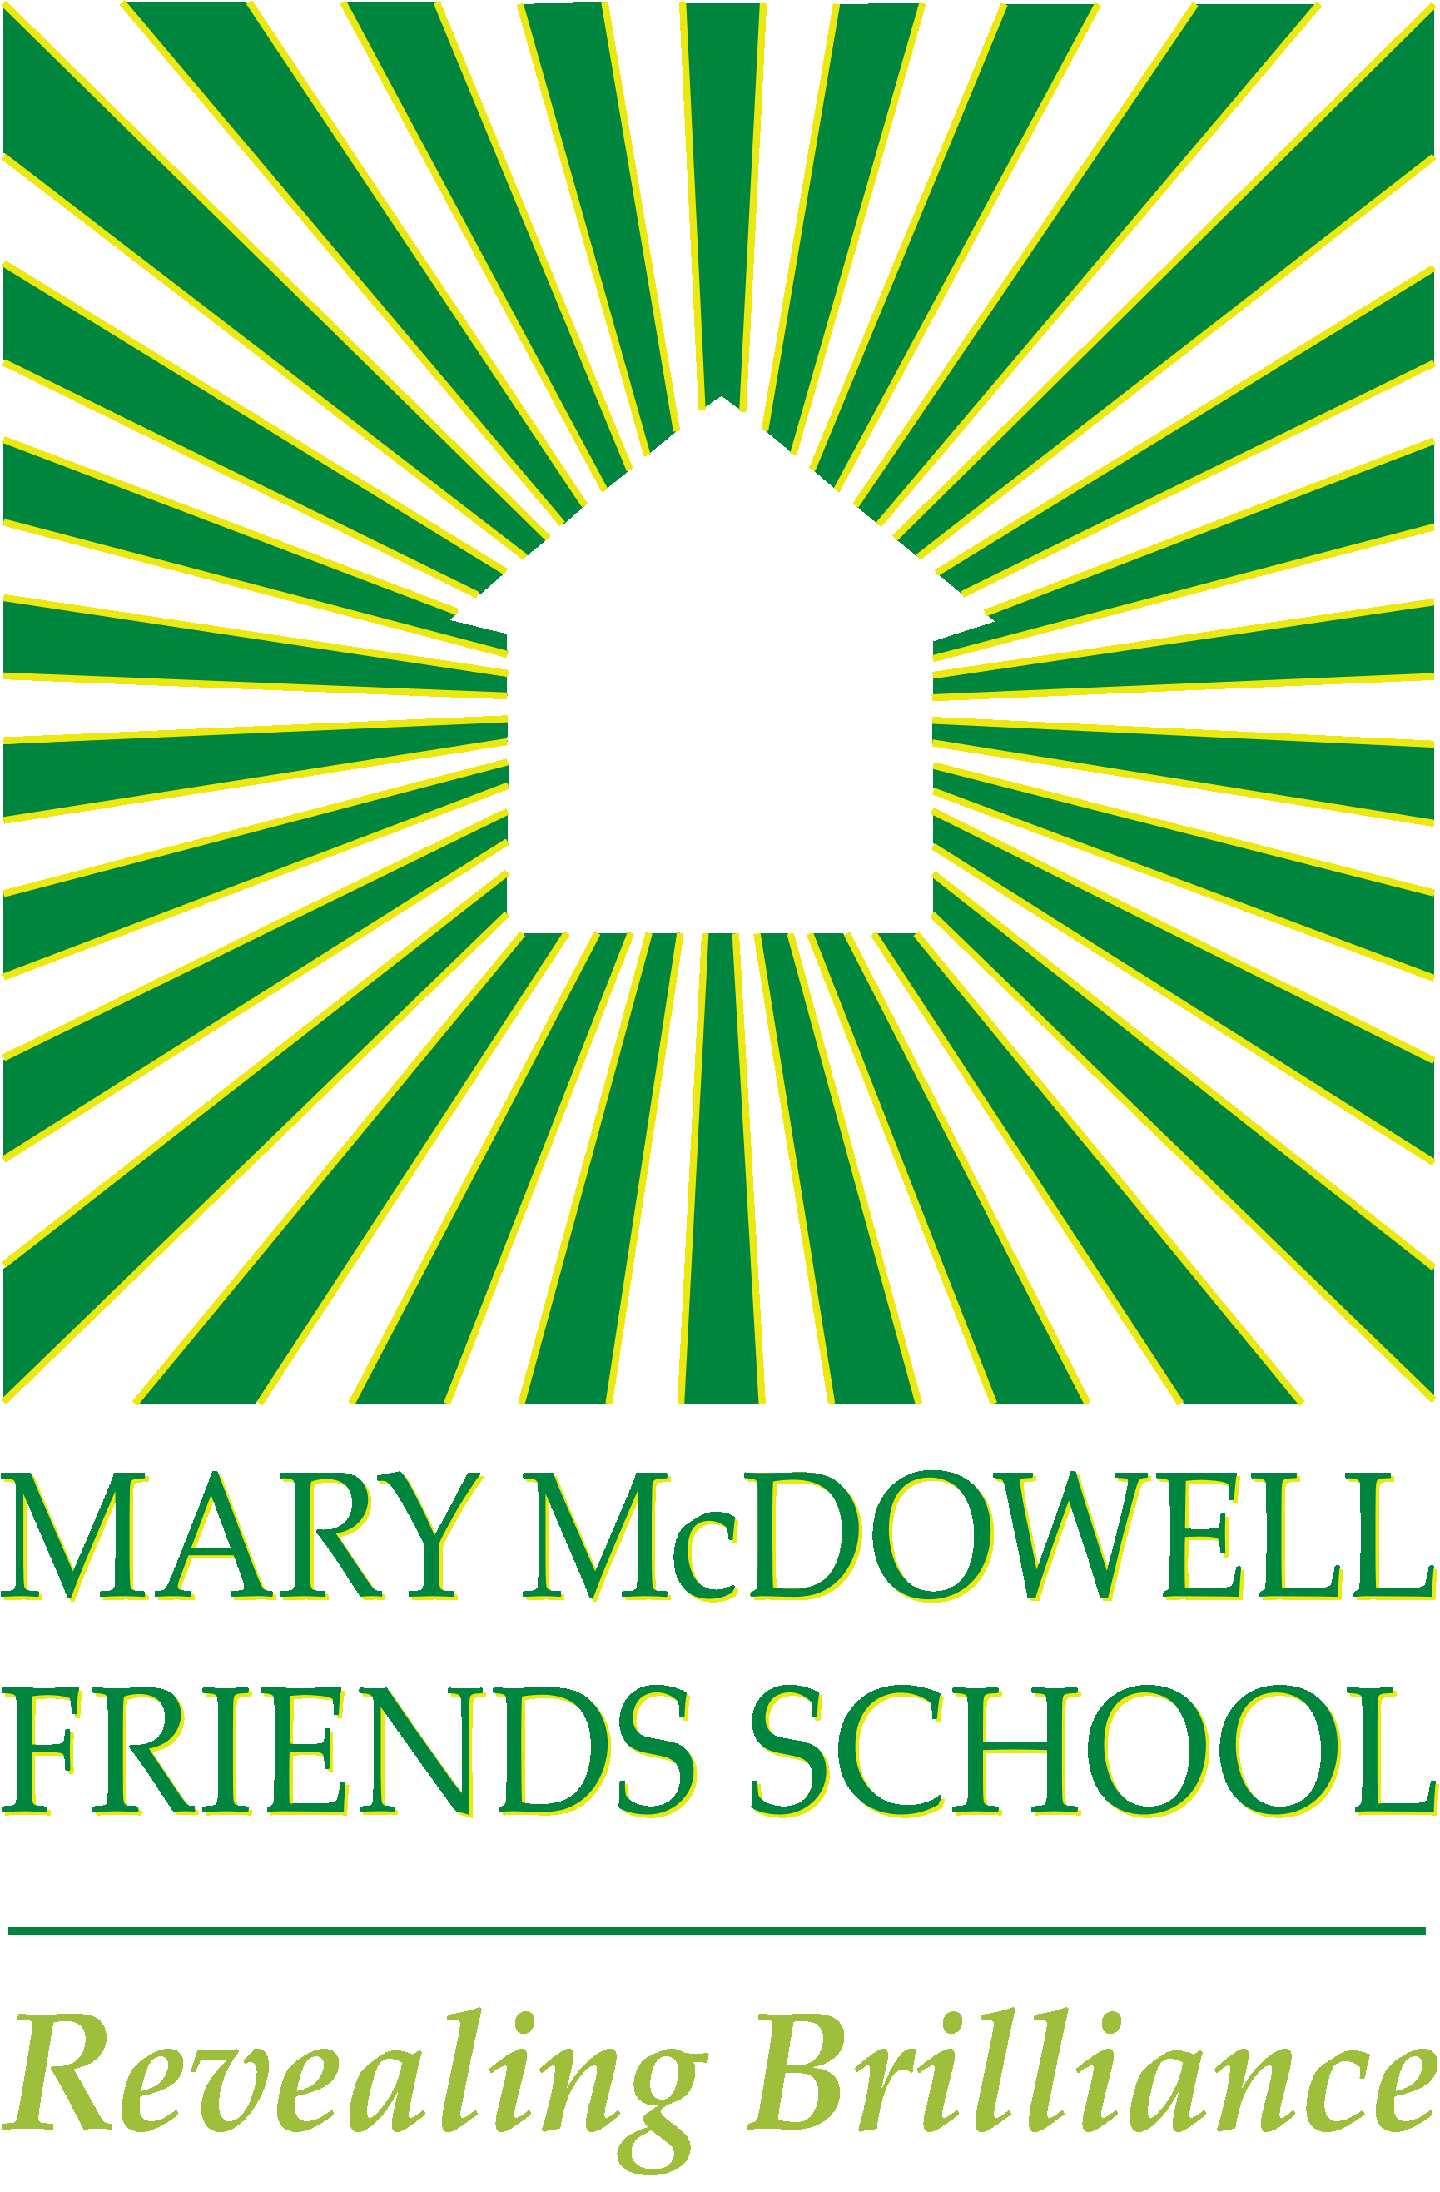 Mary McDowell Friends School